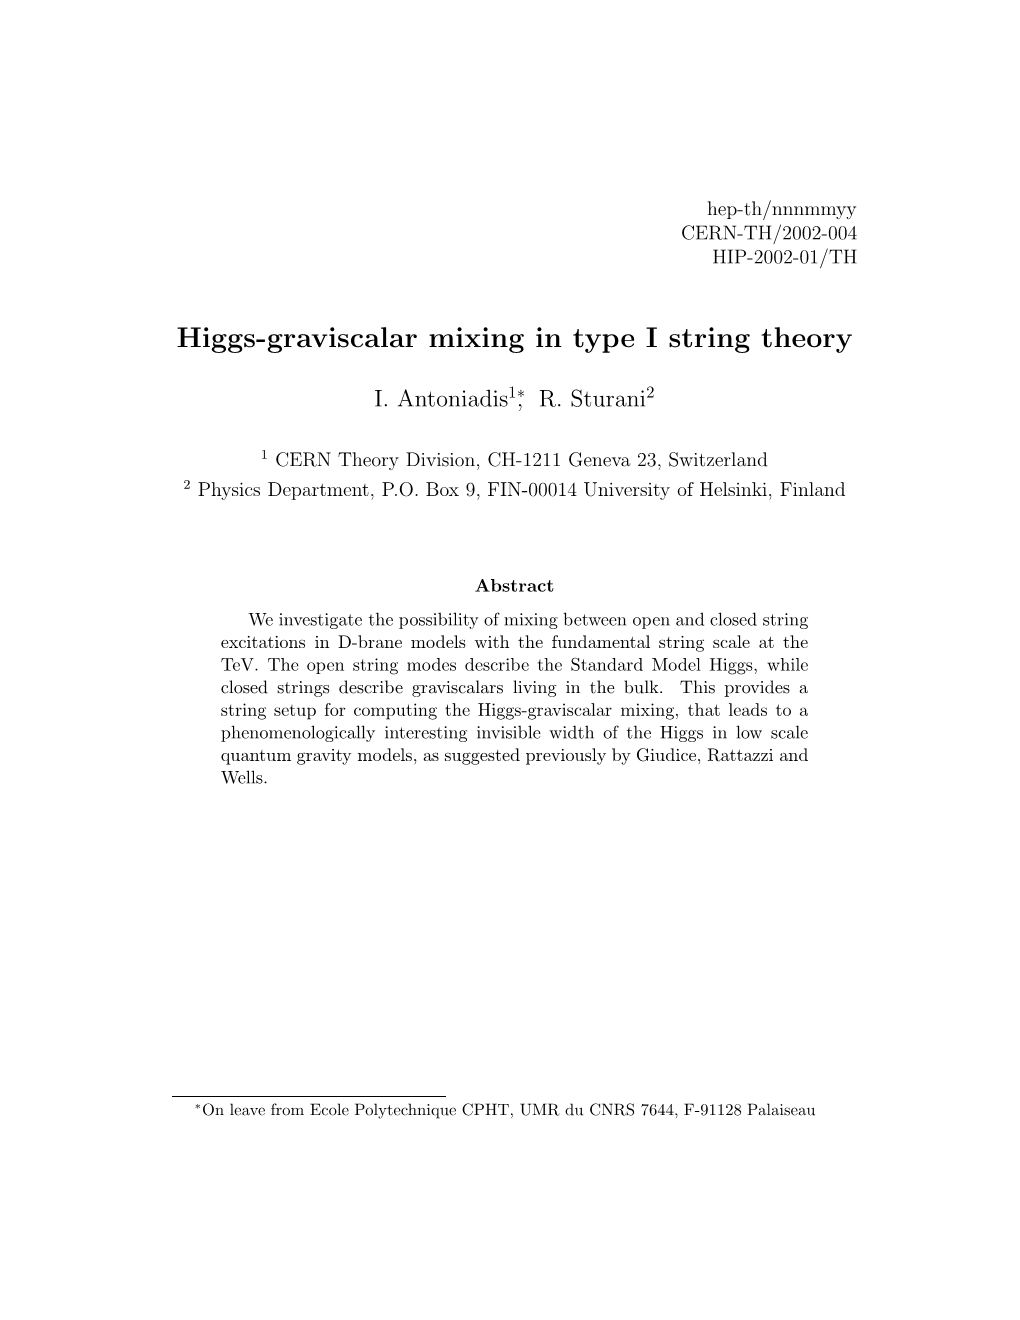 Higgs-Graviscalar Mixing in Type I String Theory